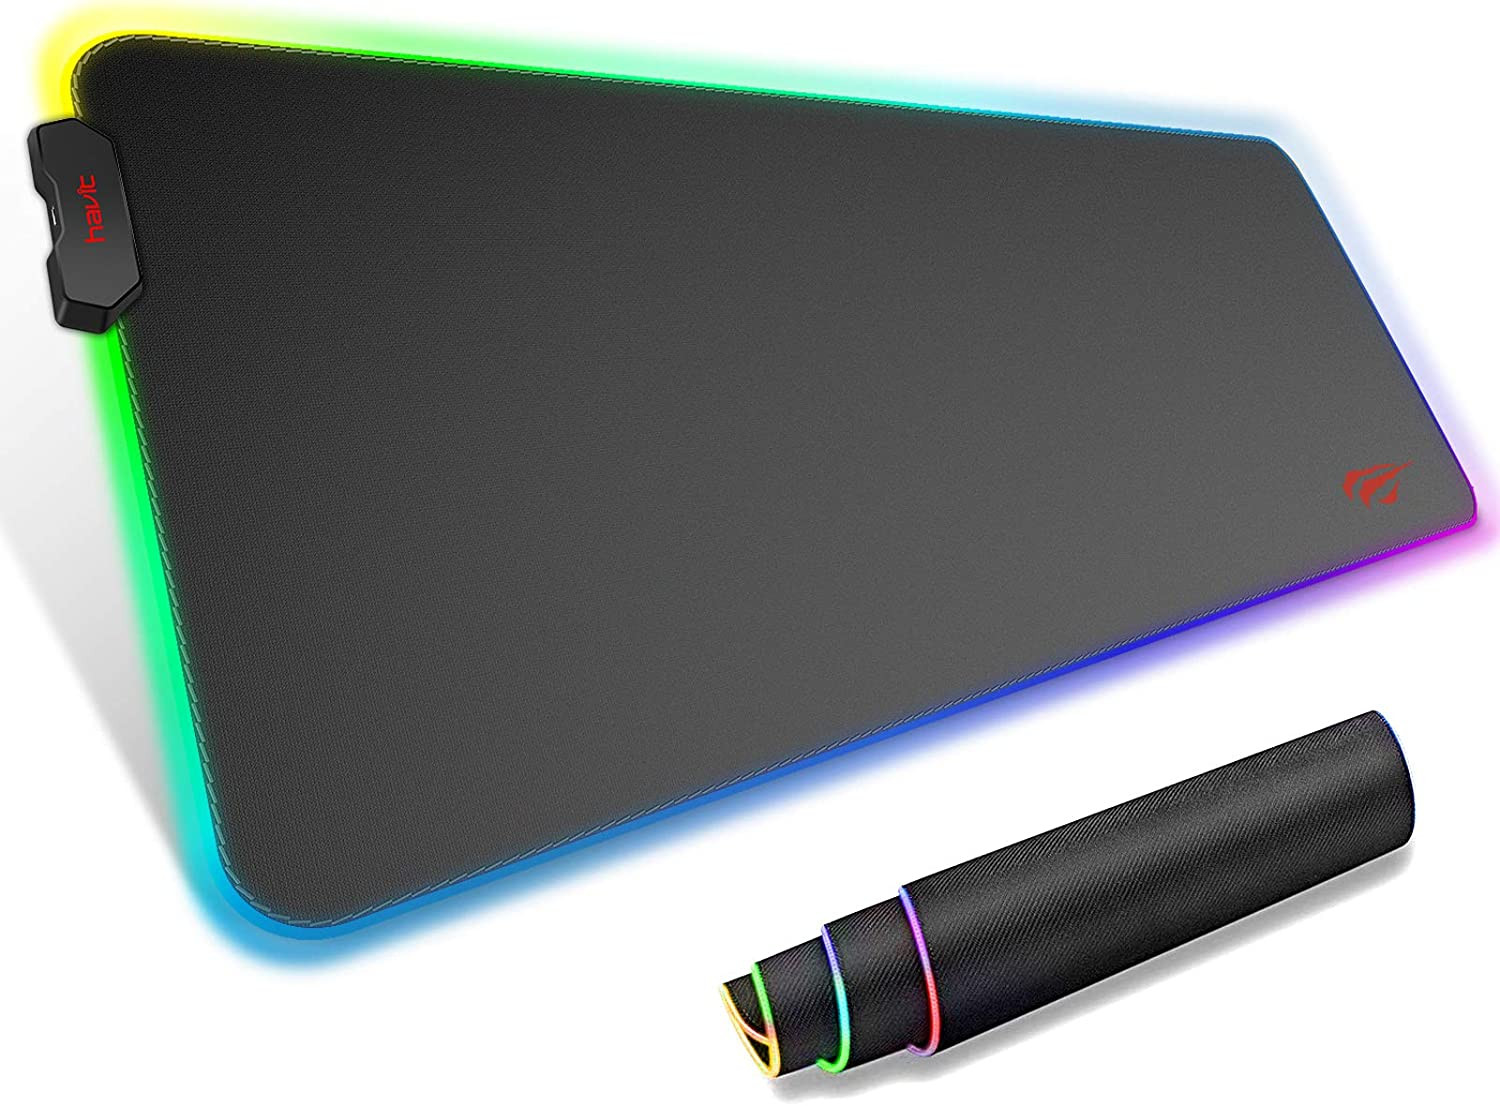 The Best Gaming Mousepad Under 20$ 2022: Havit RGB